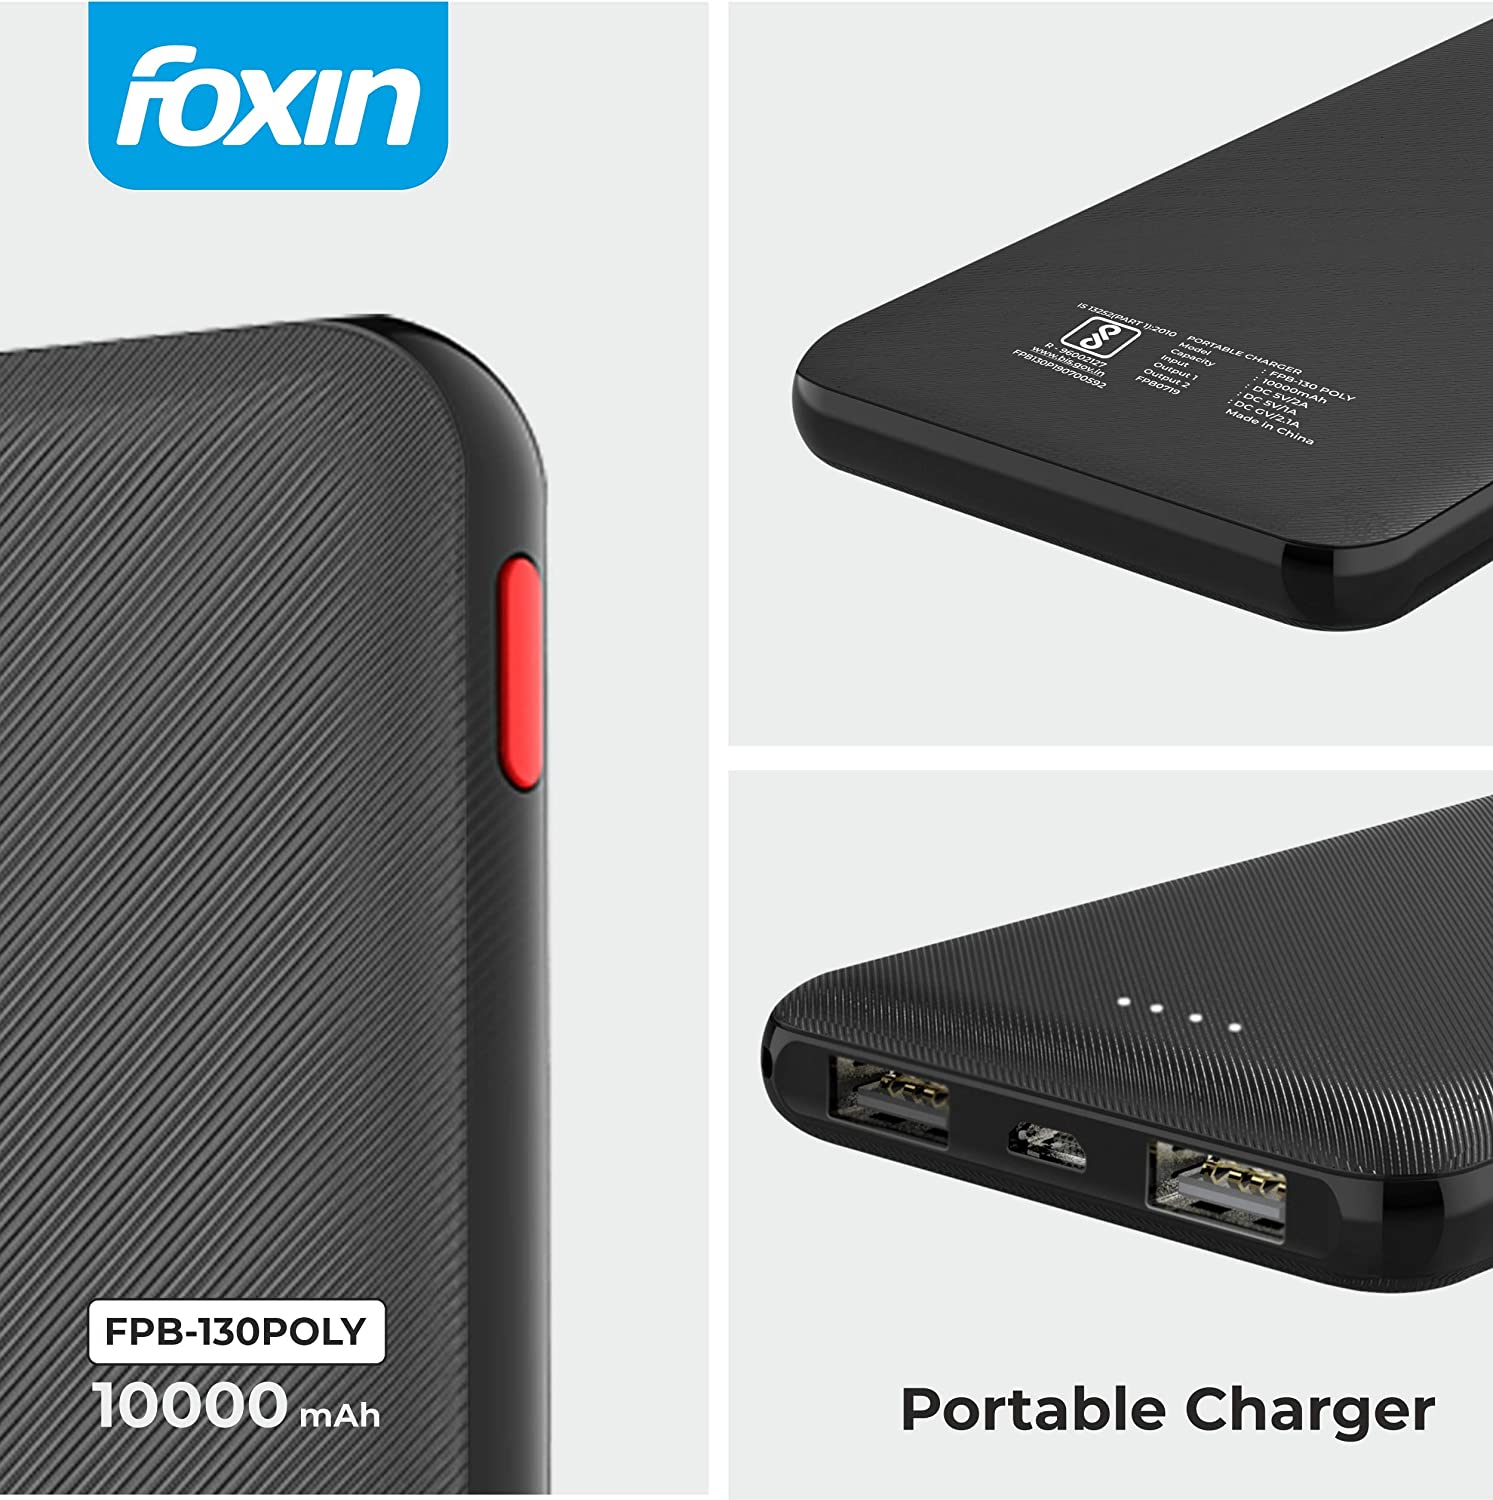 foxin battery case iphone xr